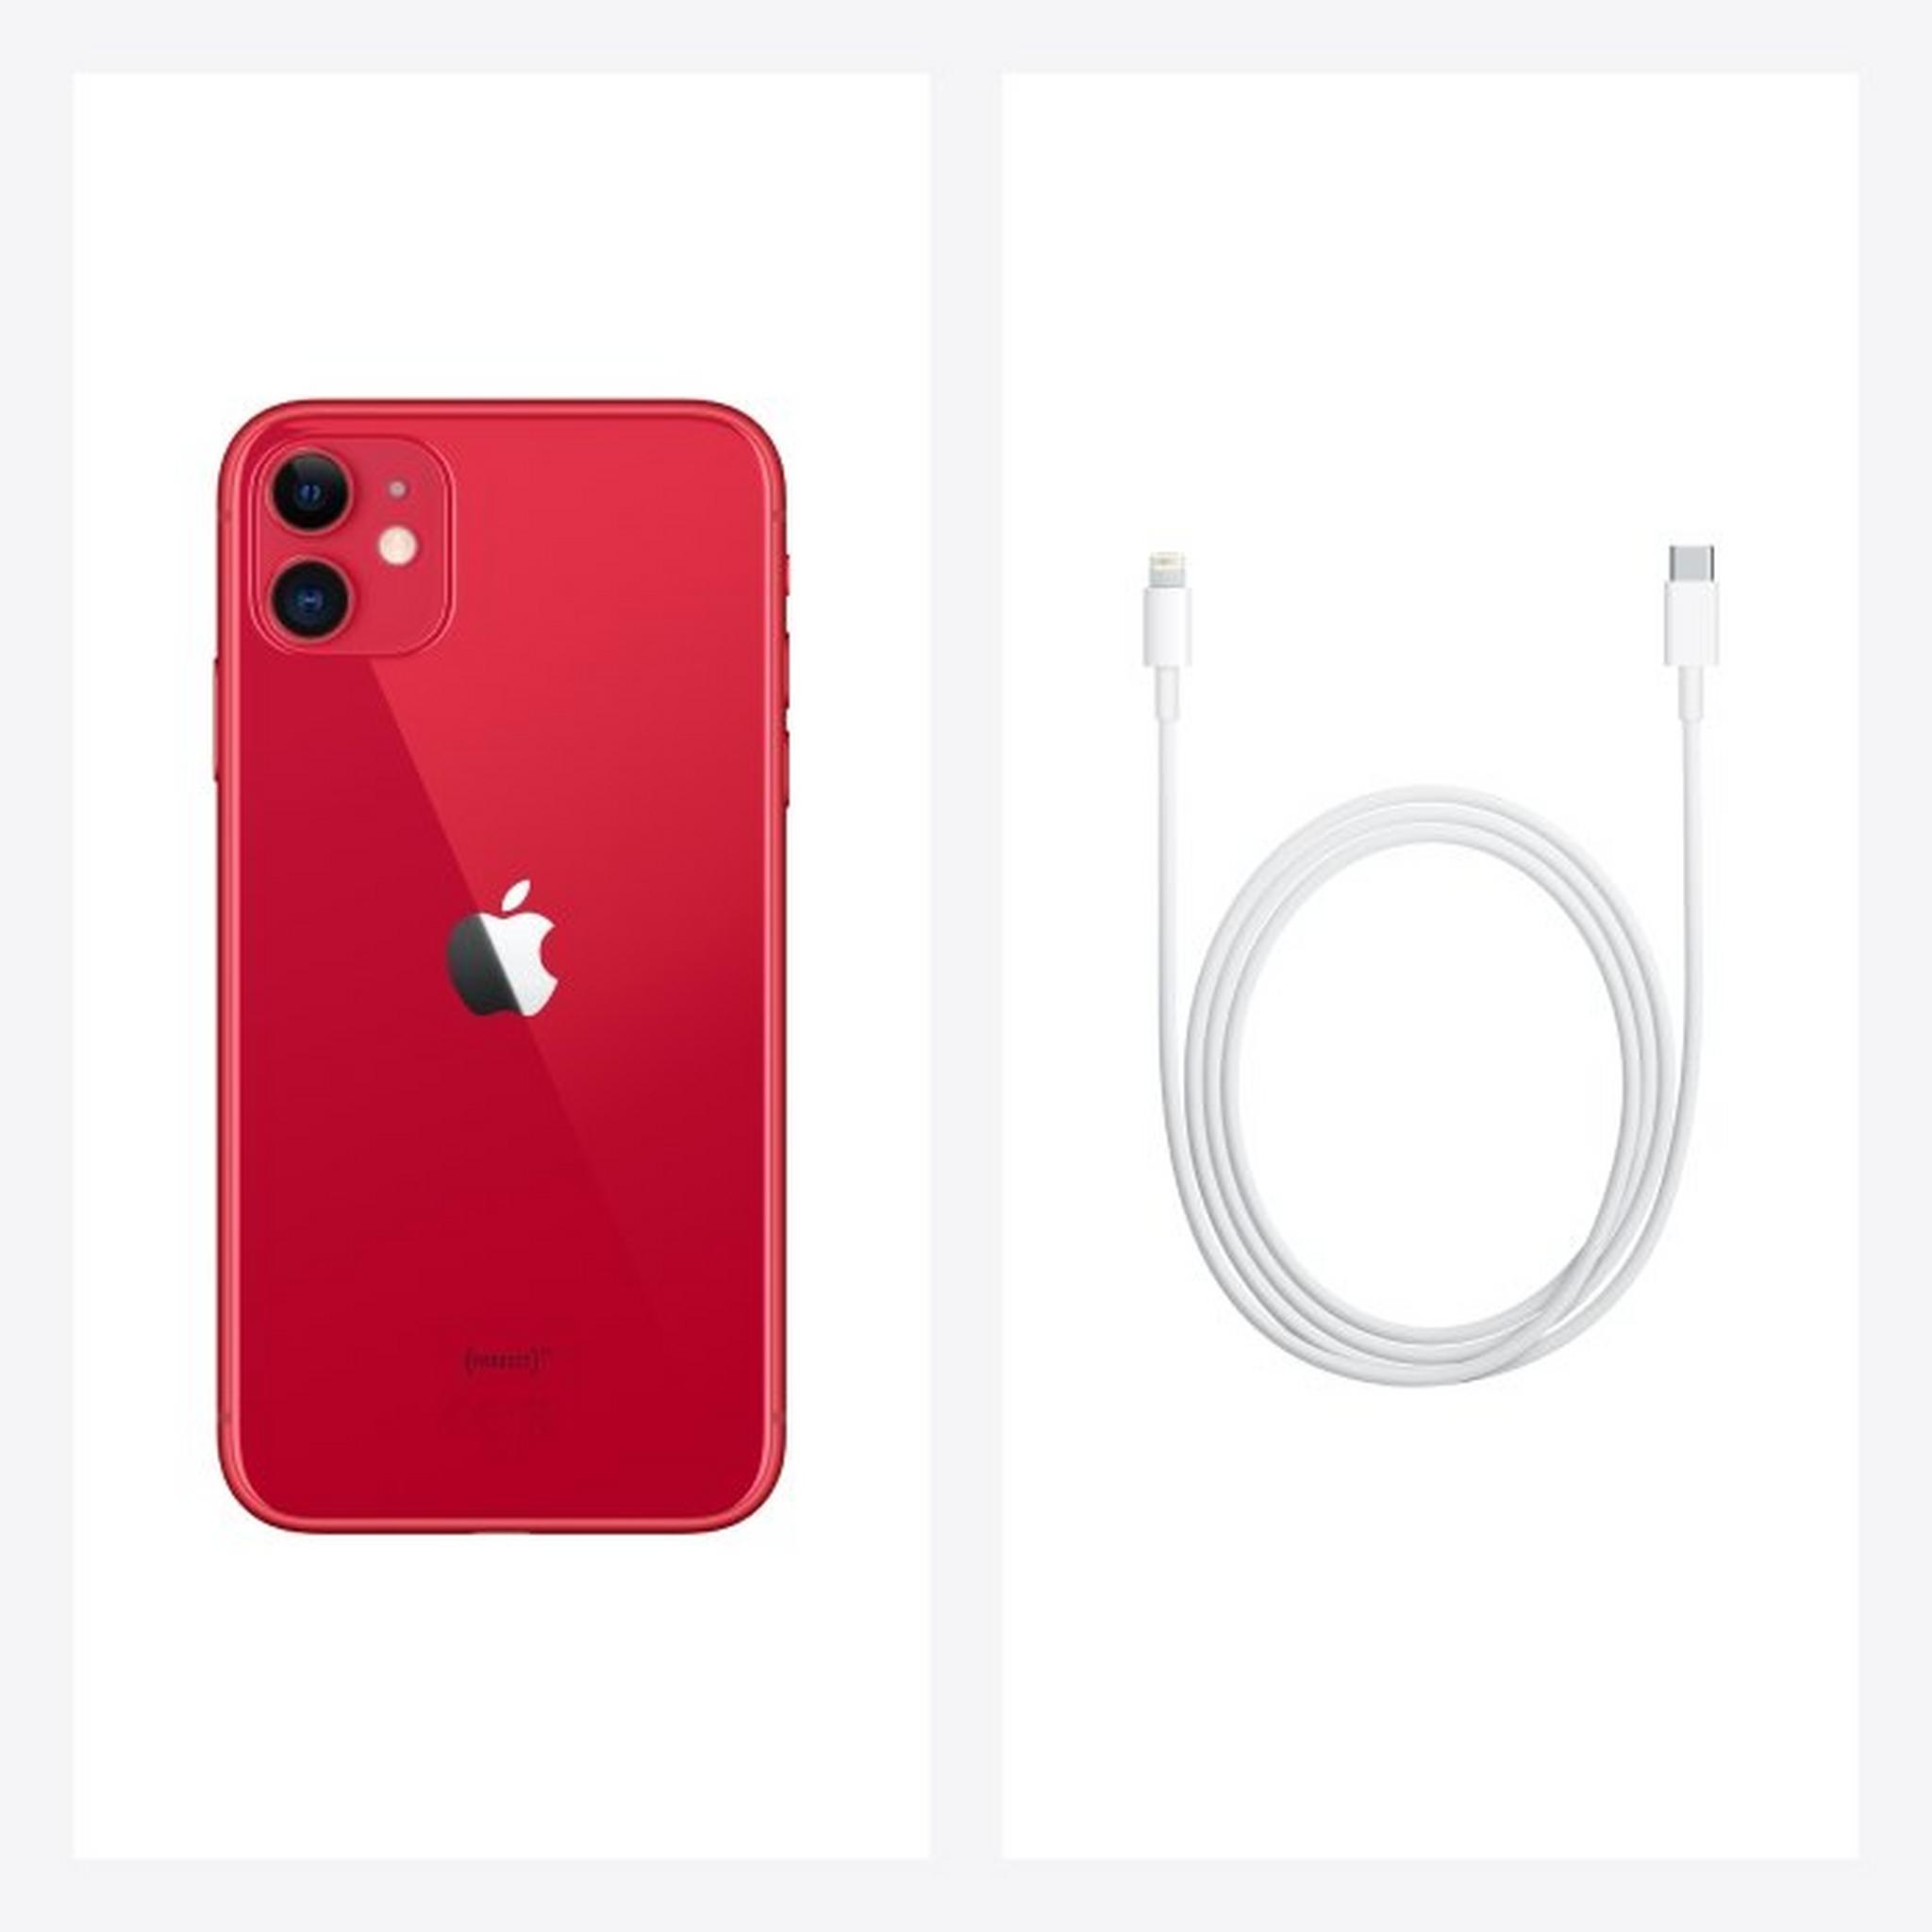 Apple iPhone 11 64GB Phone - Red